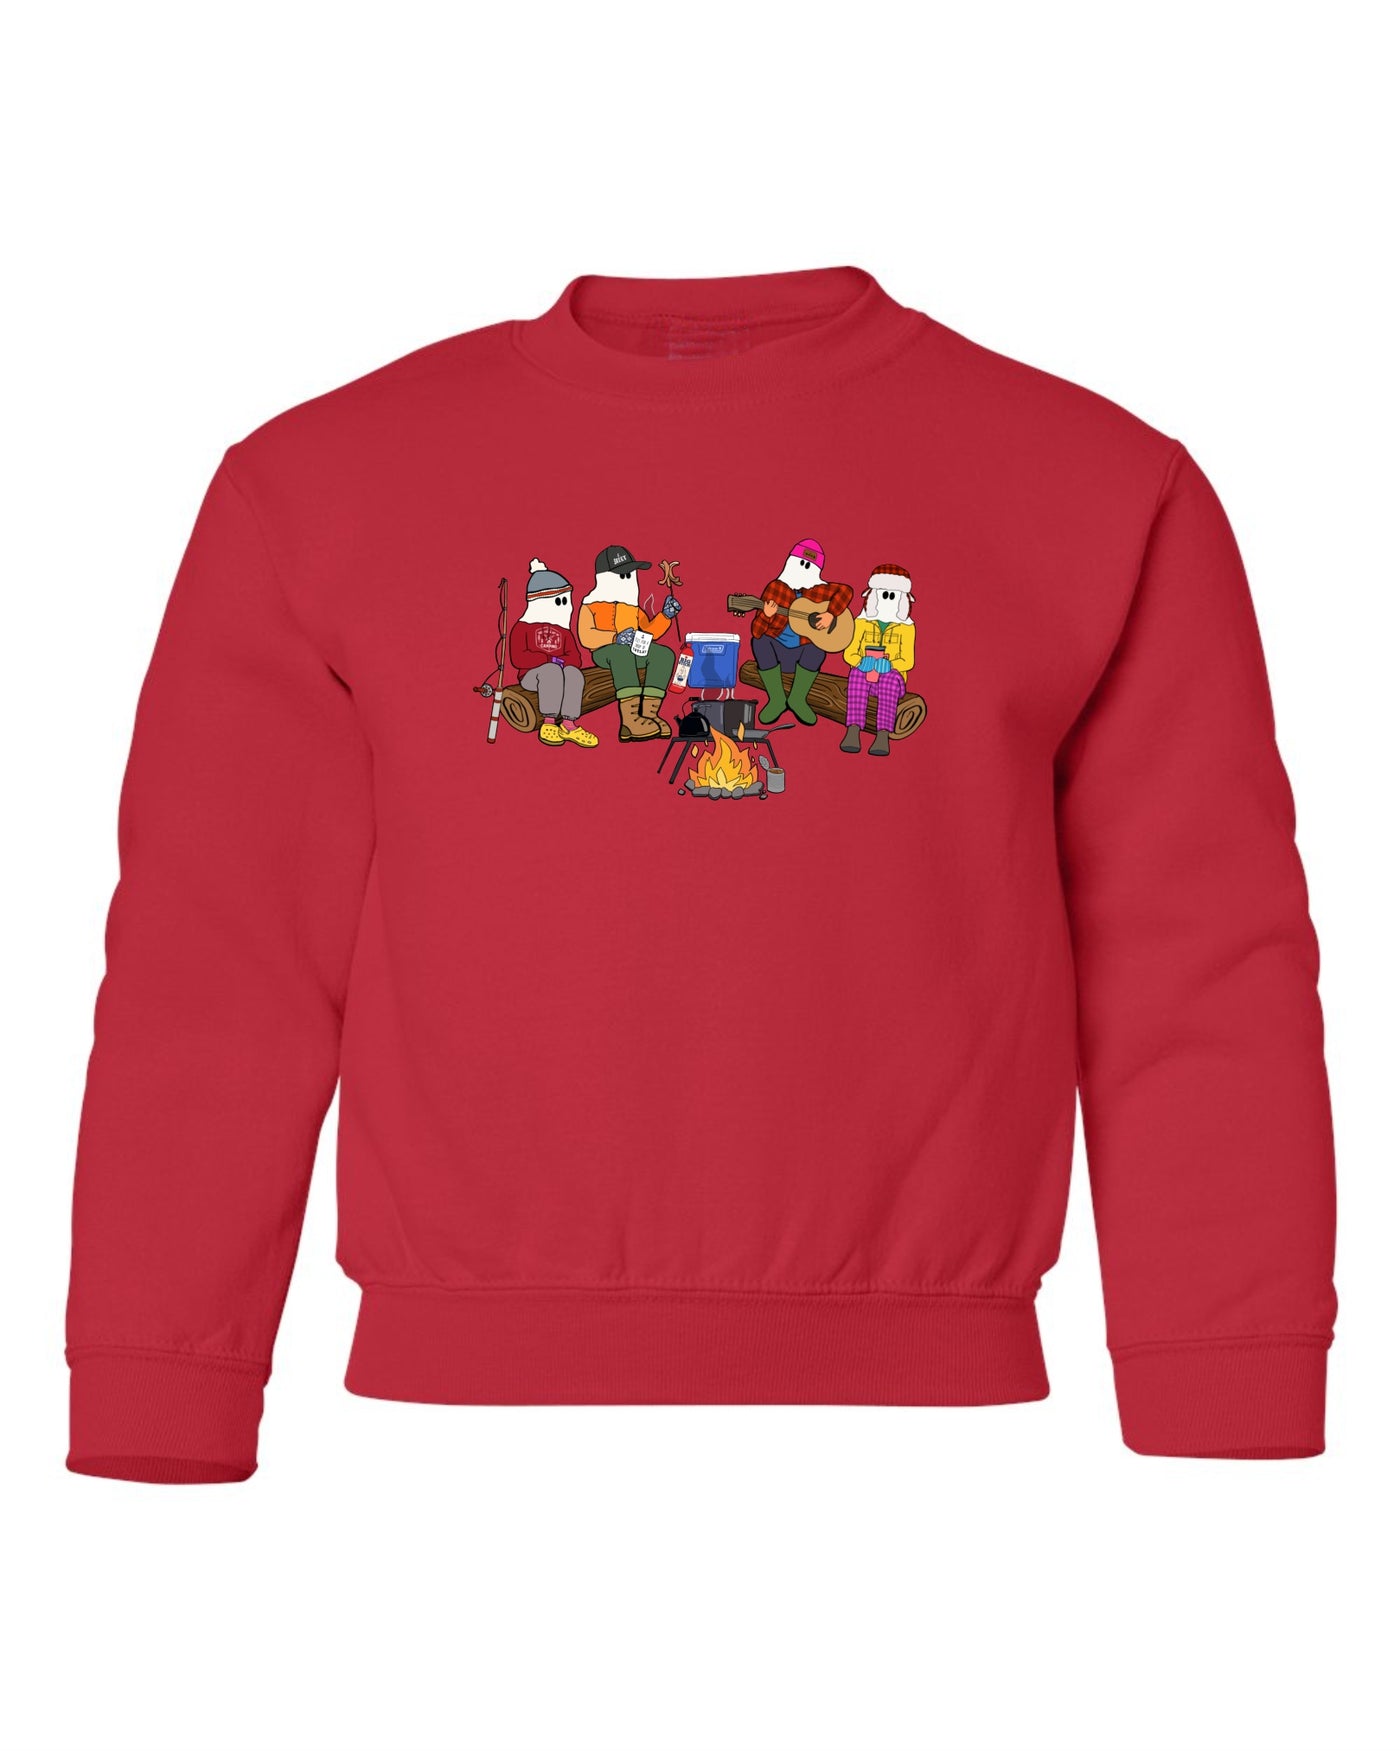 Boil Up Mummers Toddler/Youth Crewneck Sweatshirt